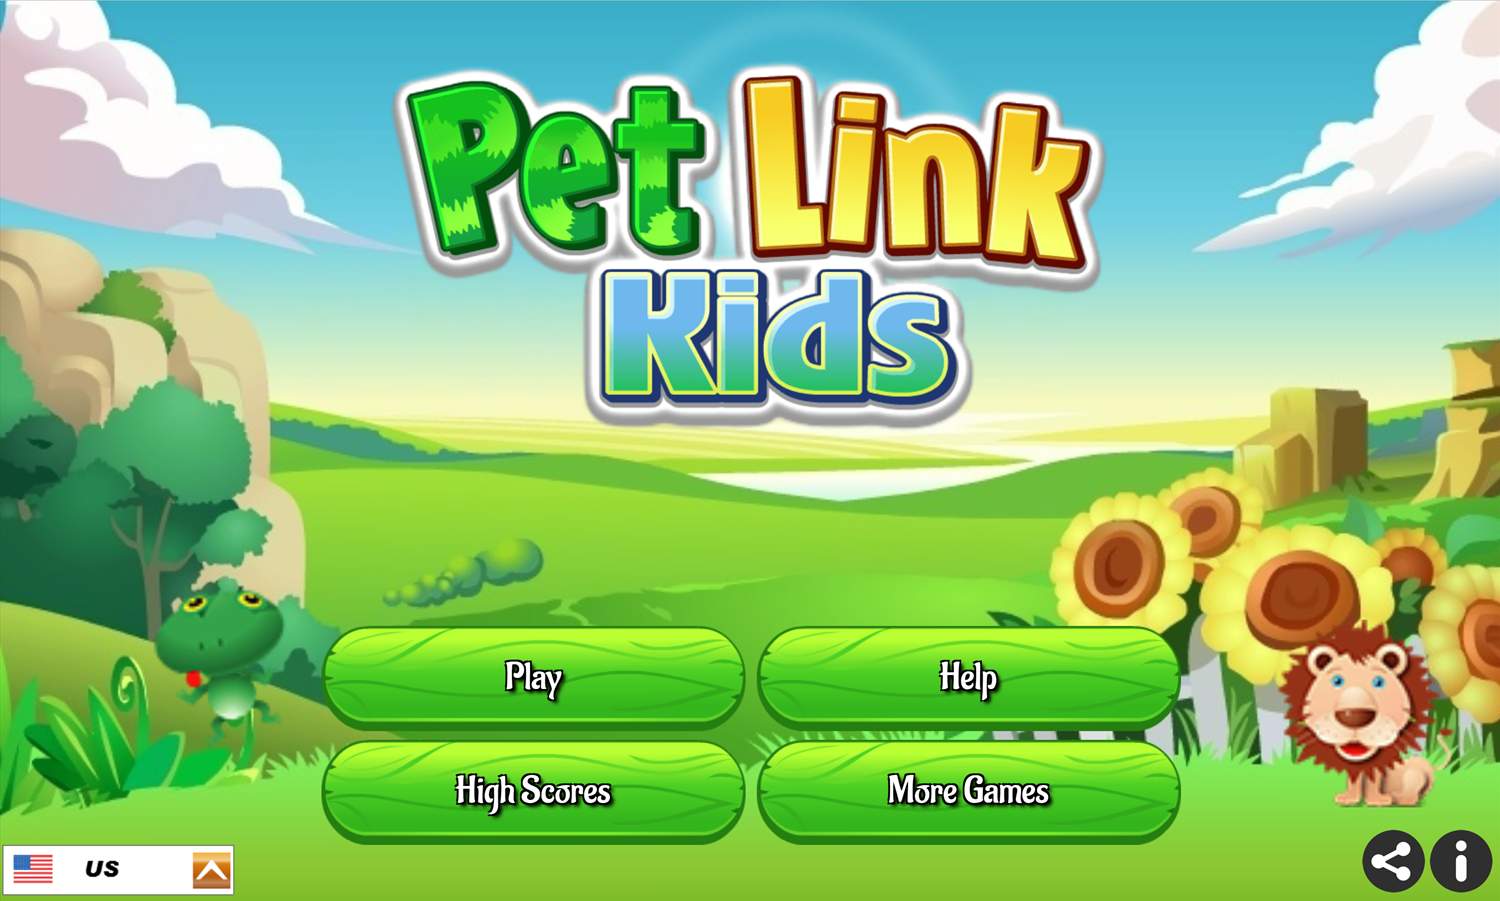 Pet Link Kids Game Welcome Screen Screenshot.